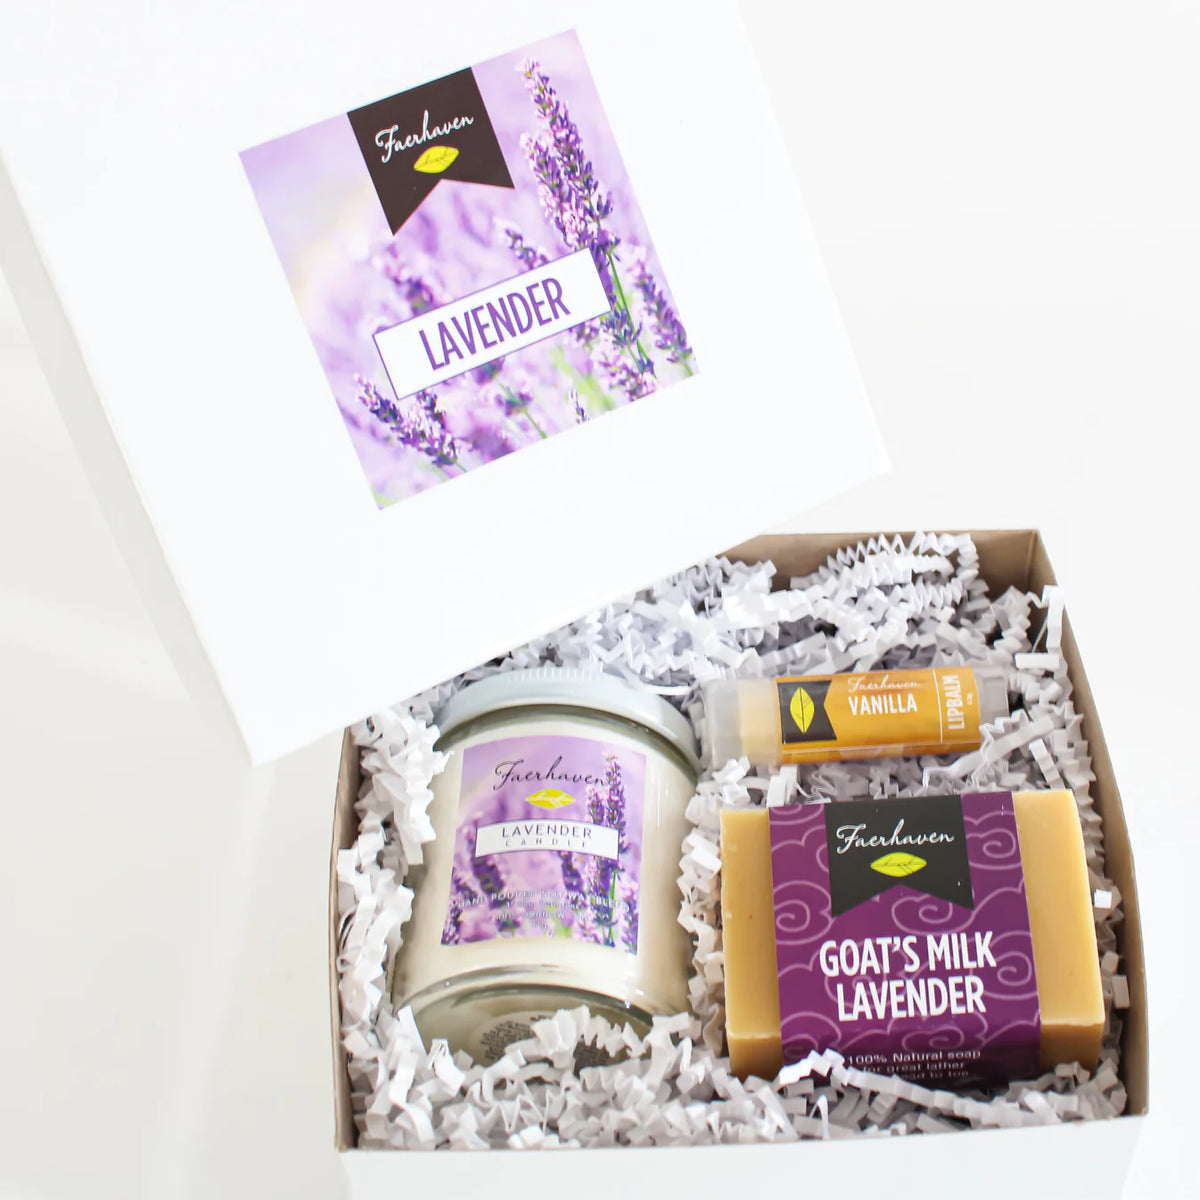 Faerhaven Goat's Milk Lavender Gift Box Set